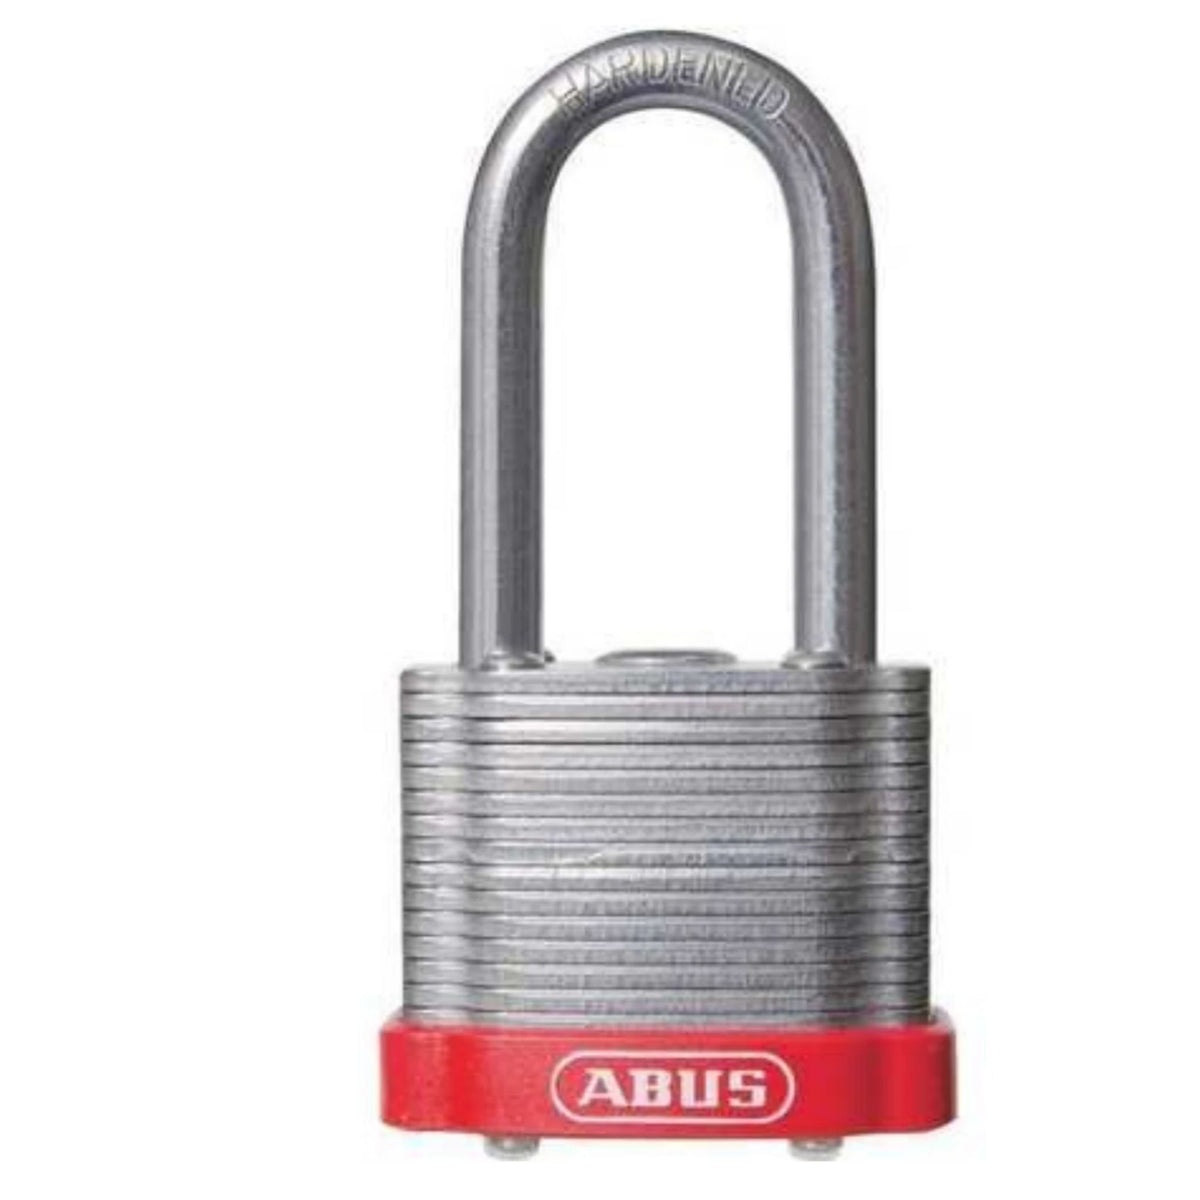 Abus 41/40HB50 Red Lock Laminated Steel Padlocks Keyed Alike (4140 KA), KD or MK Locks with 2-Inch Shackle - The Lock Source